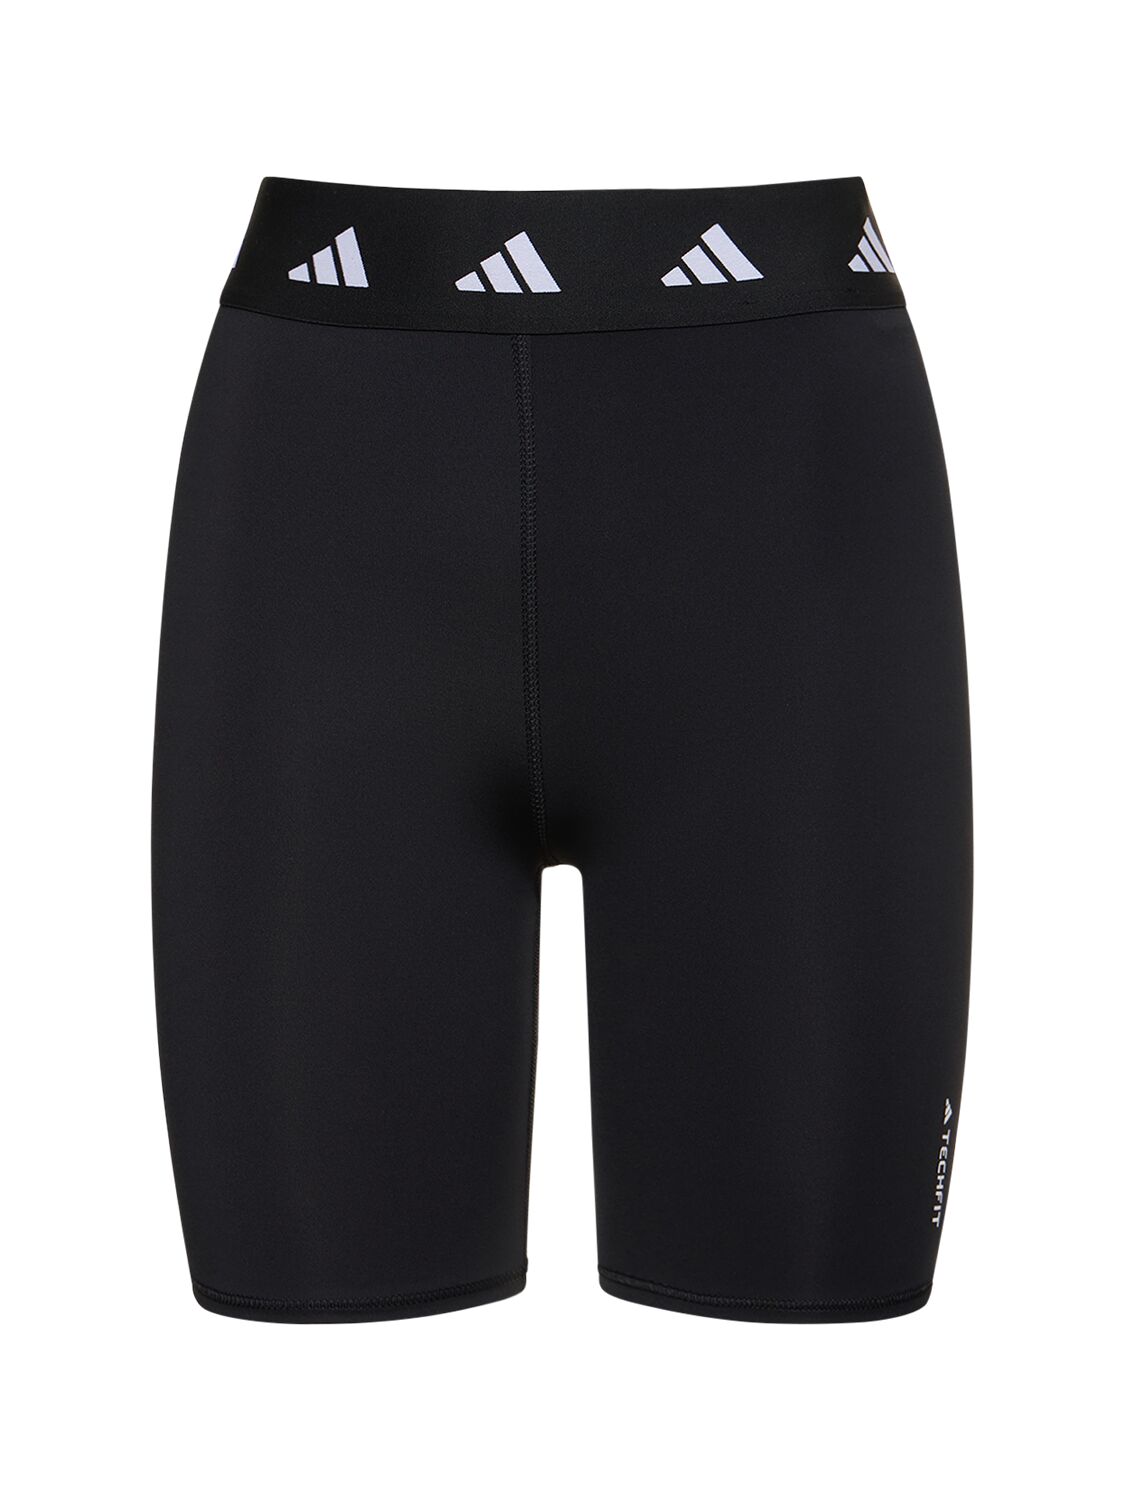 Adidas Originals Techfit Shorts In Black